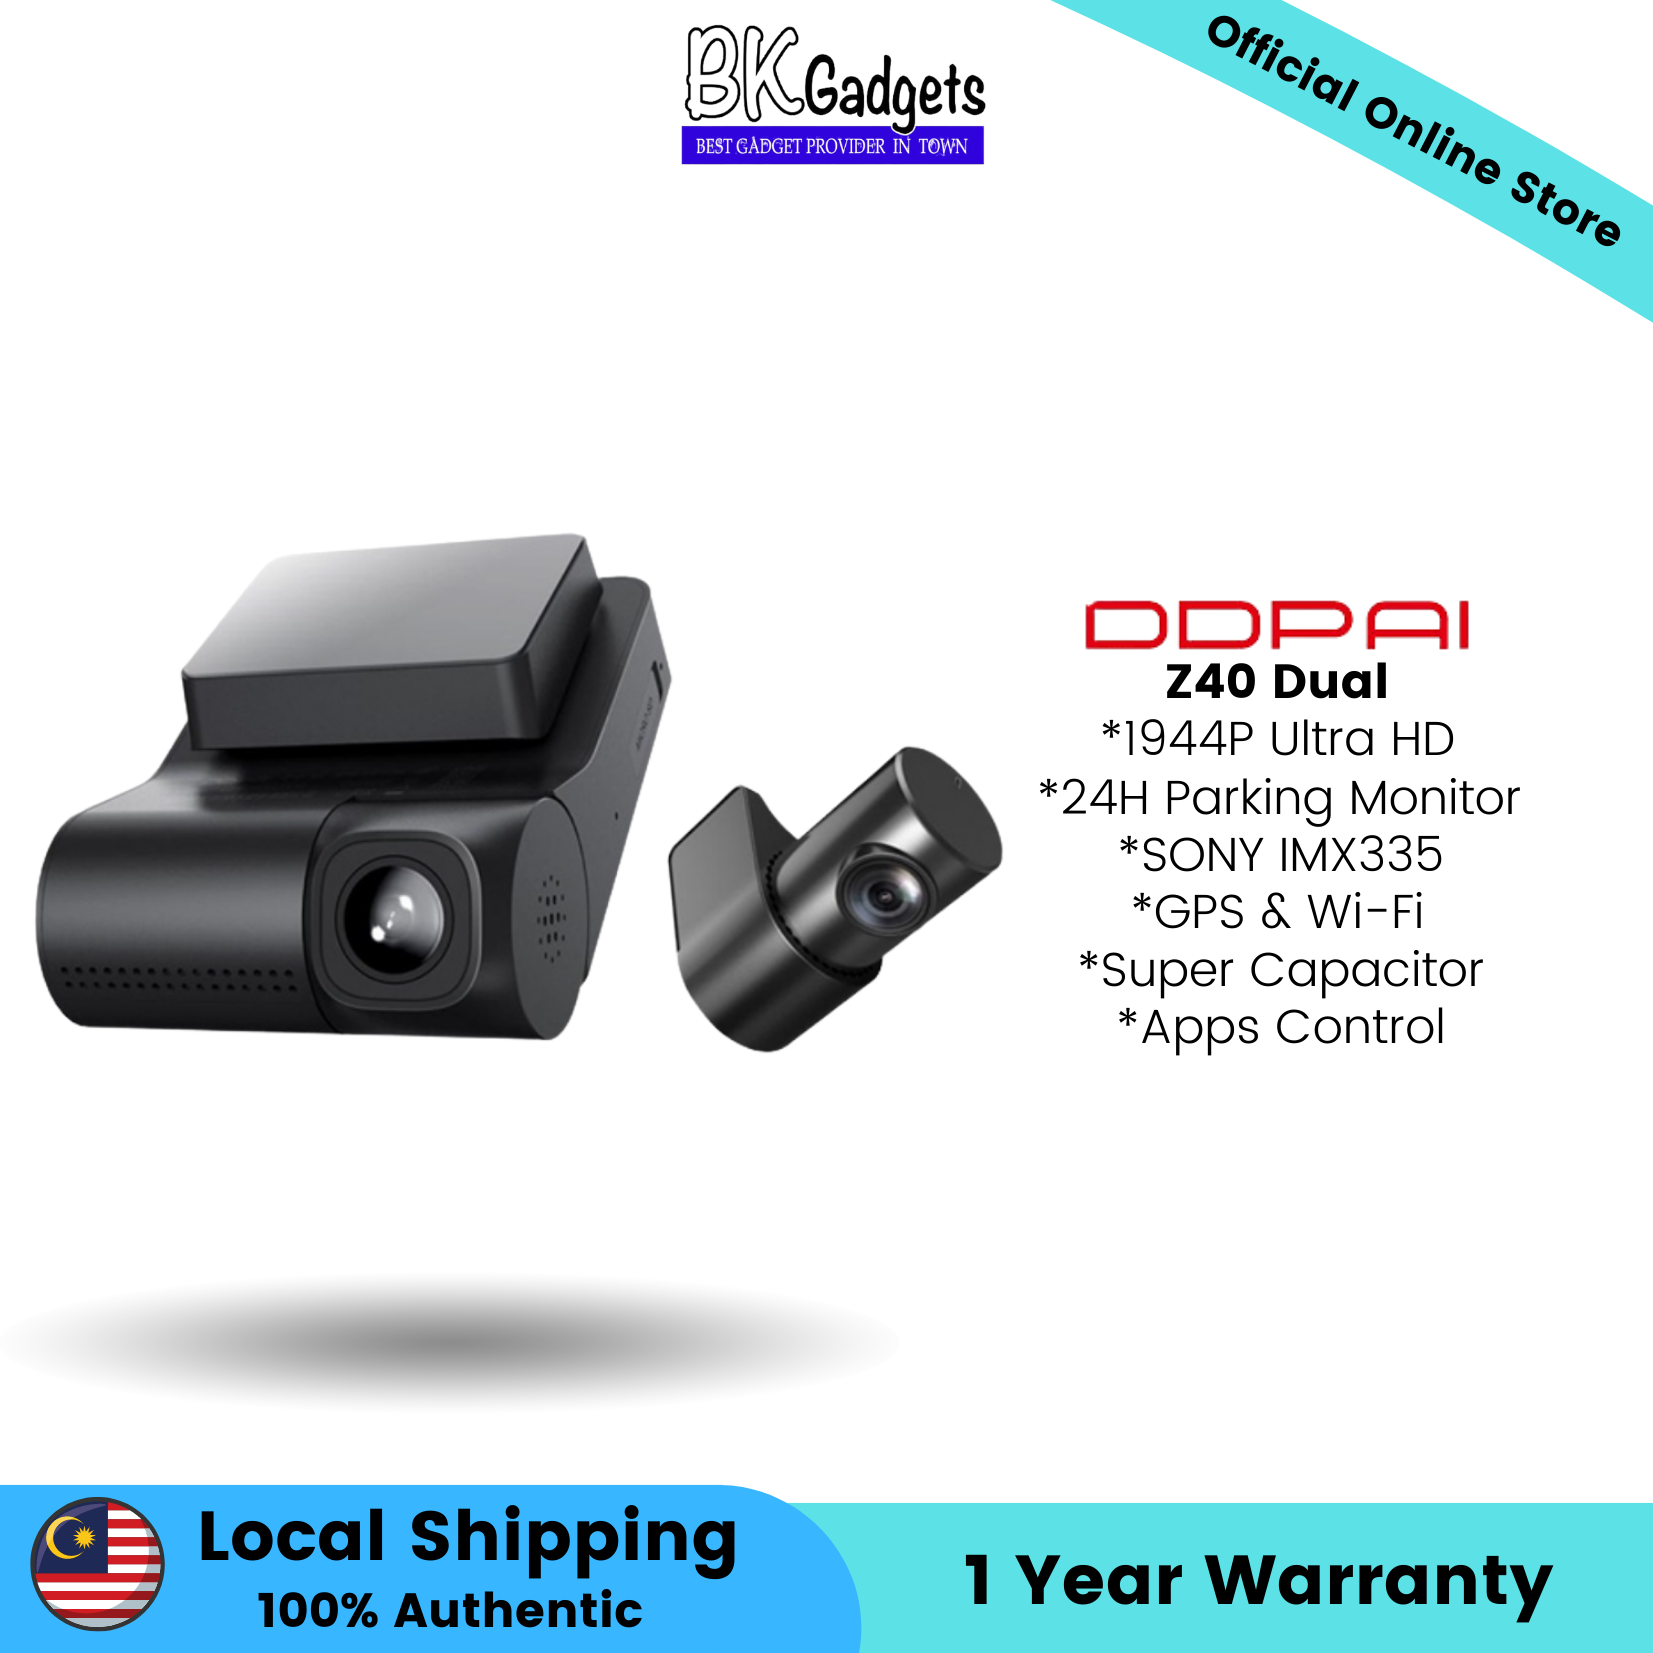 DDPai Dash Cam Z40 Dual - 1944P Ultra HD | 24H Parking Monitor | GPS & Wi-Fi